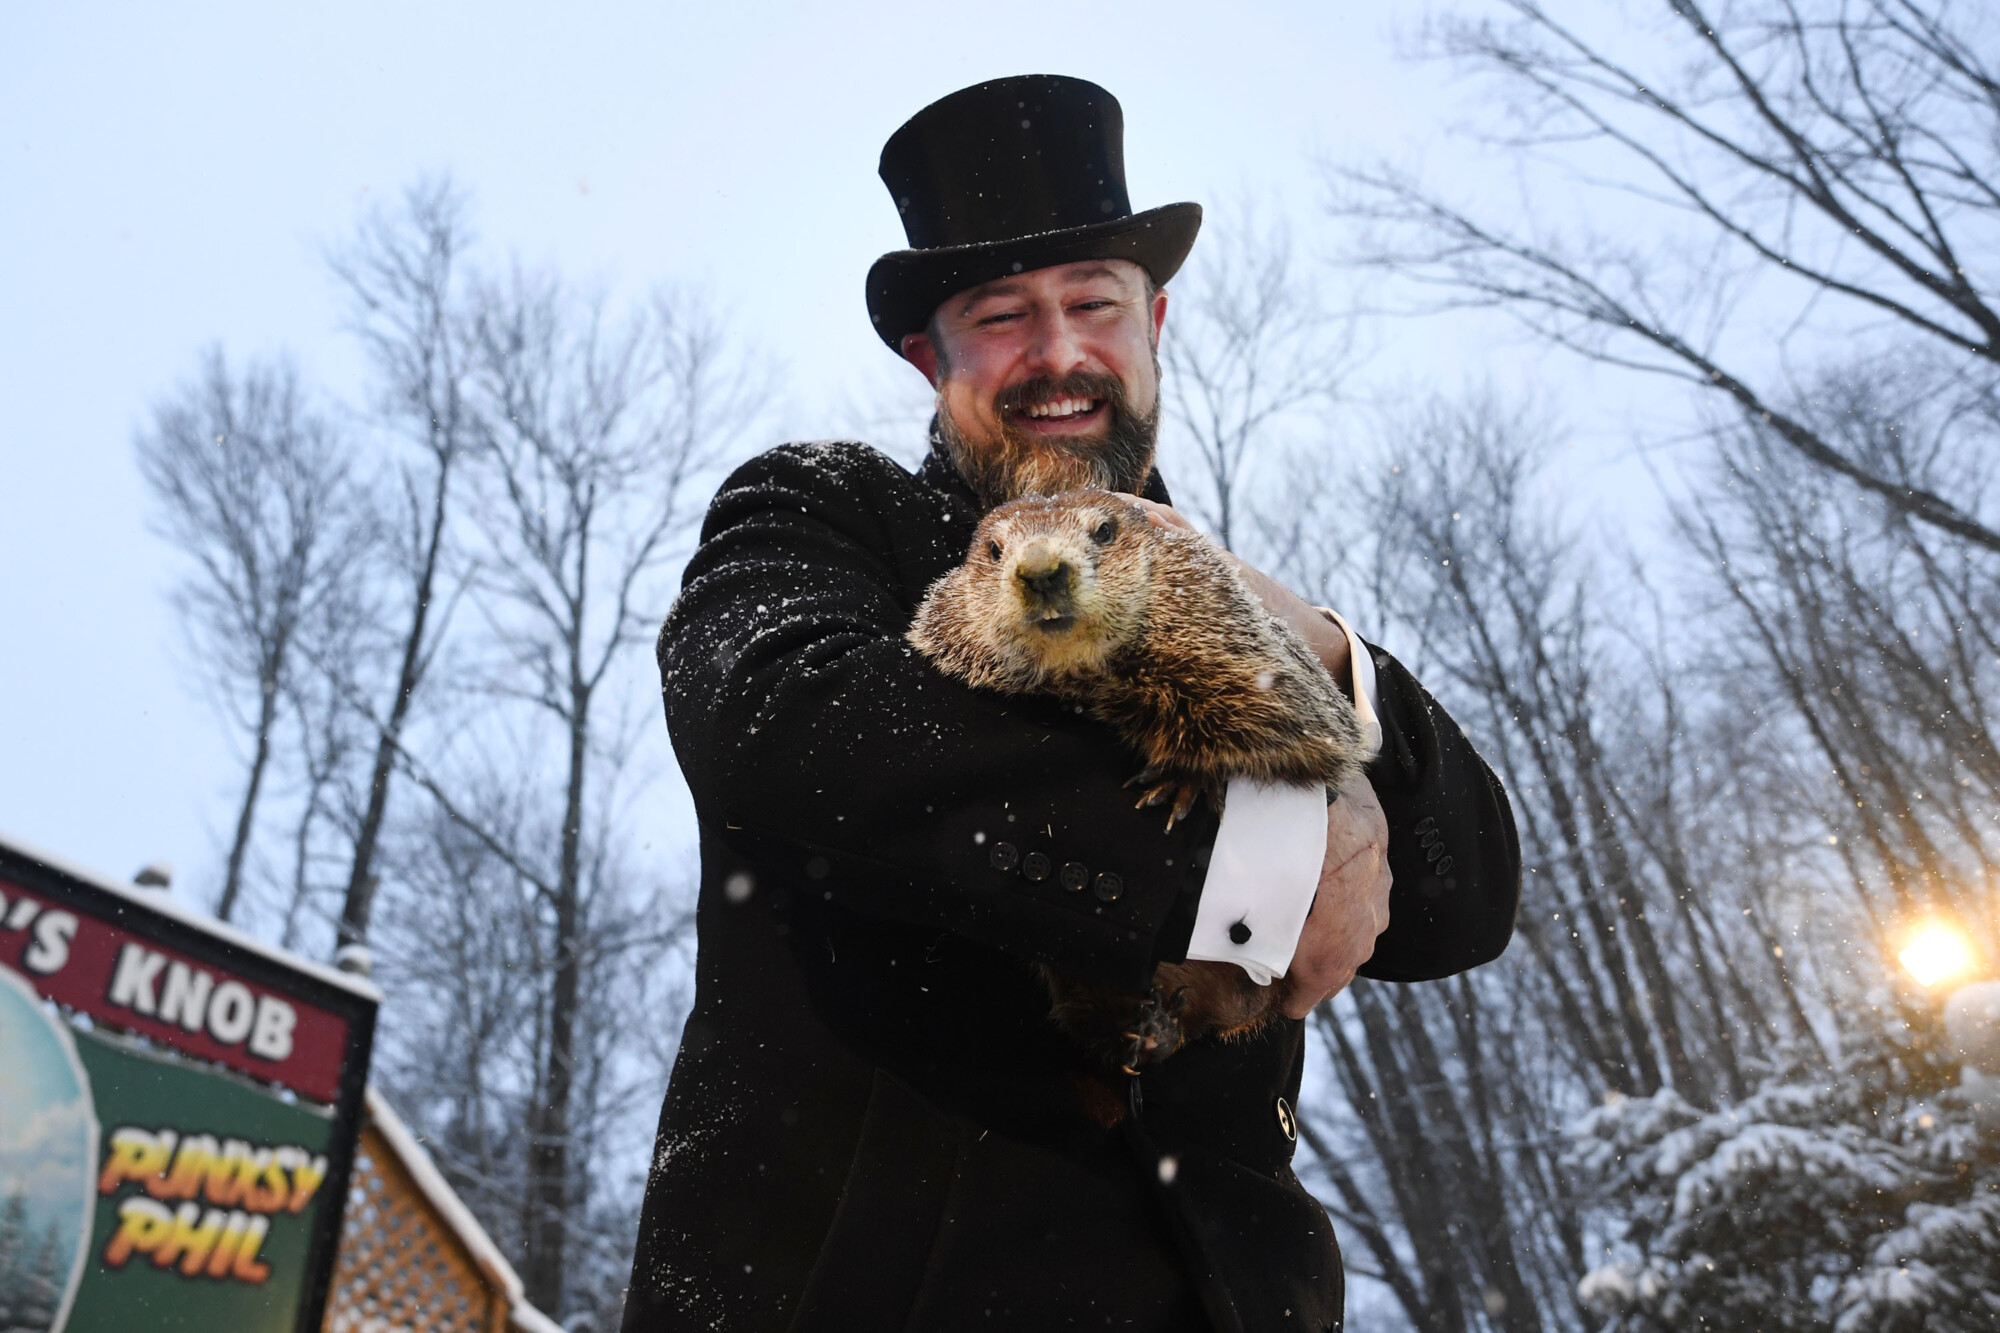 A Gloomy Groundhog Day: Punxsutawney Phil Says More Winter